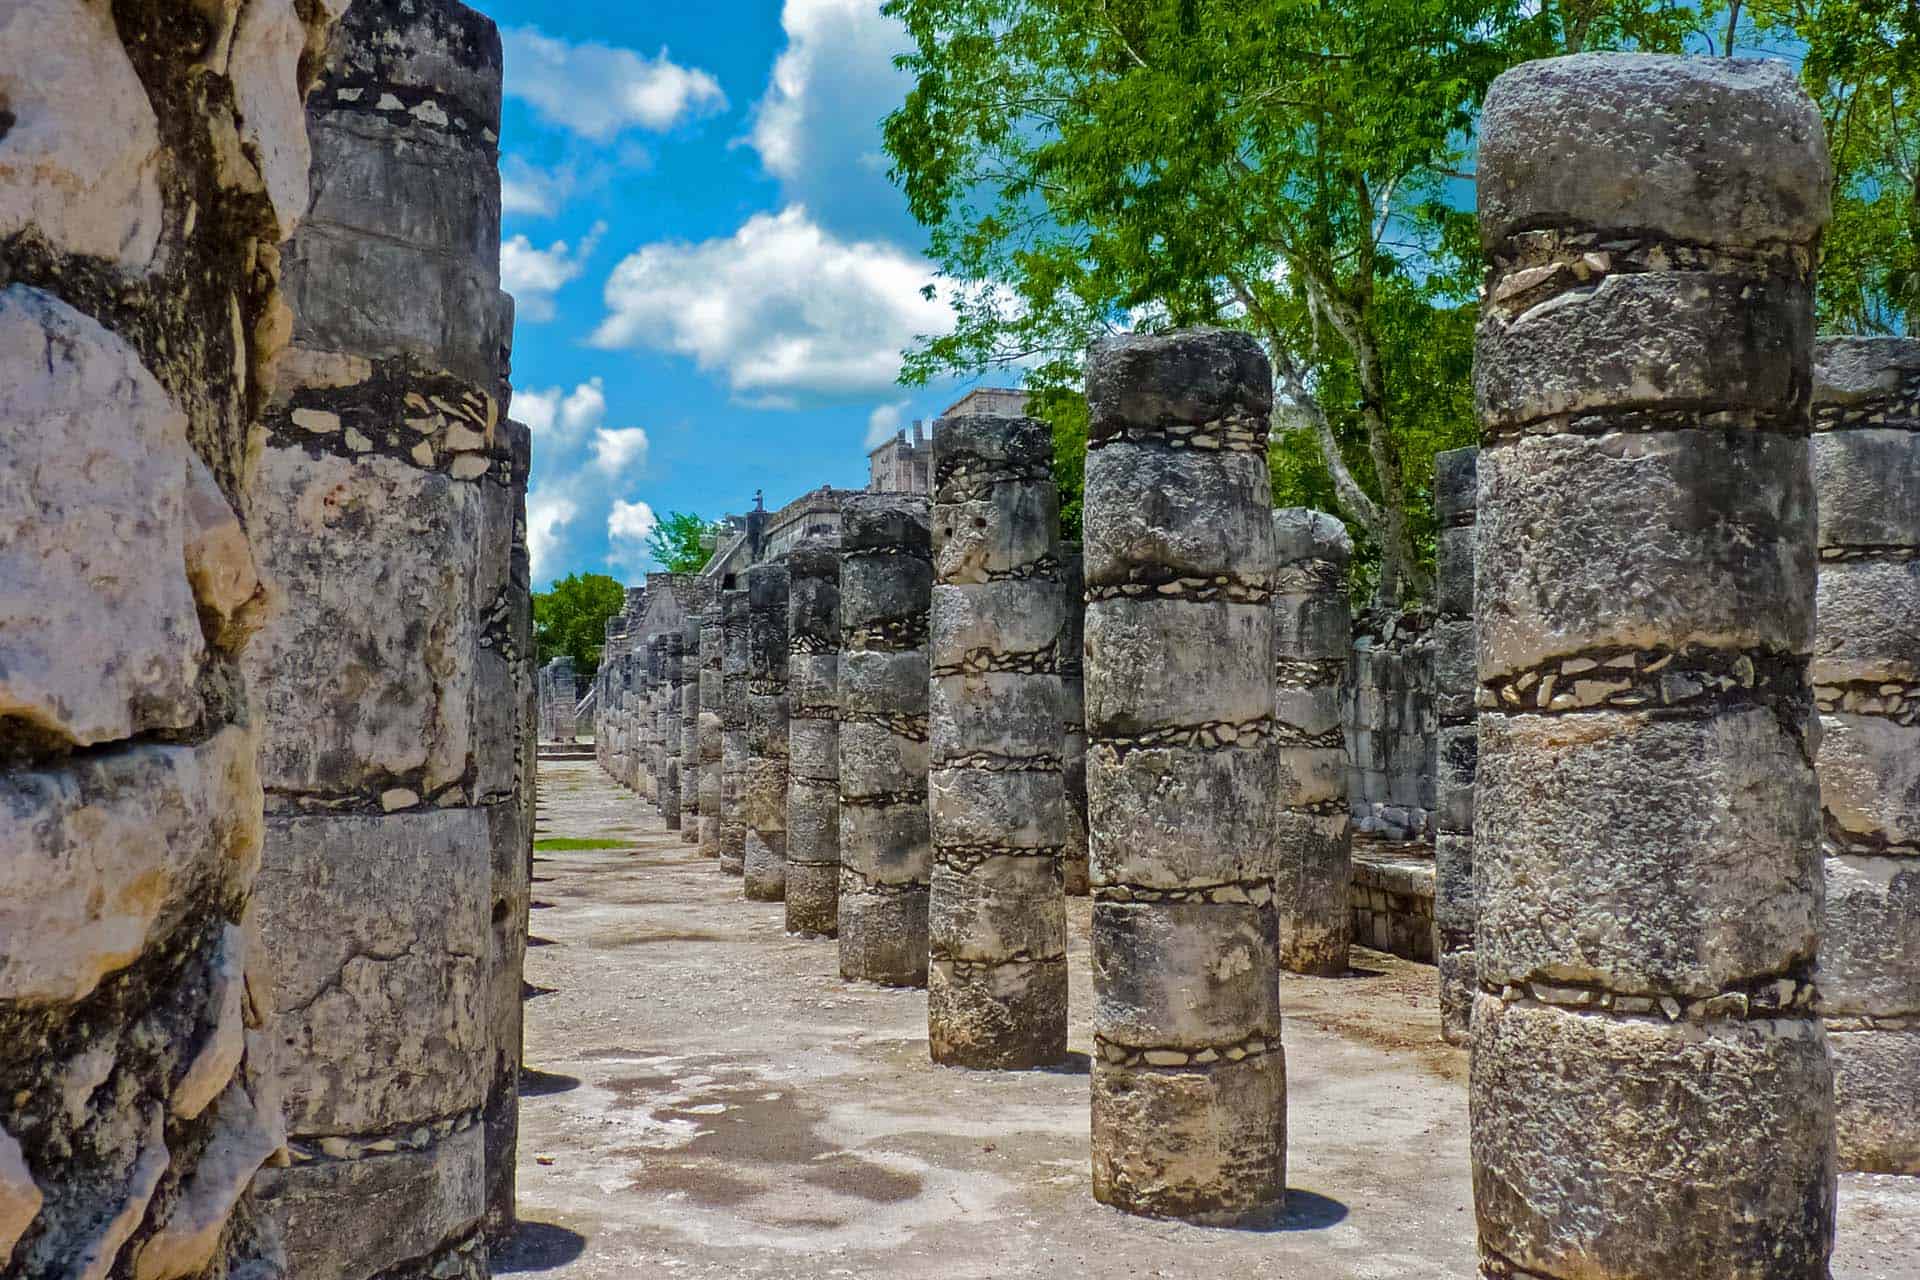 Mayan Ruins of Chichen Itza, Mexico - Hall of 1000 Columns